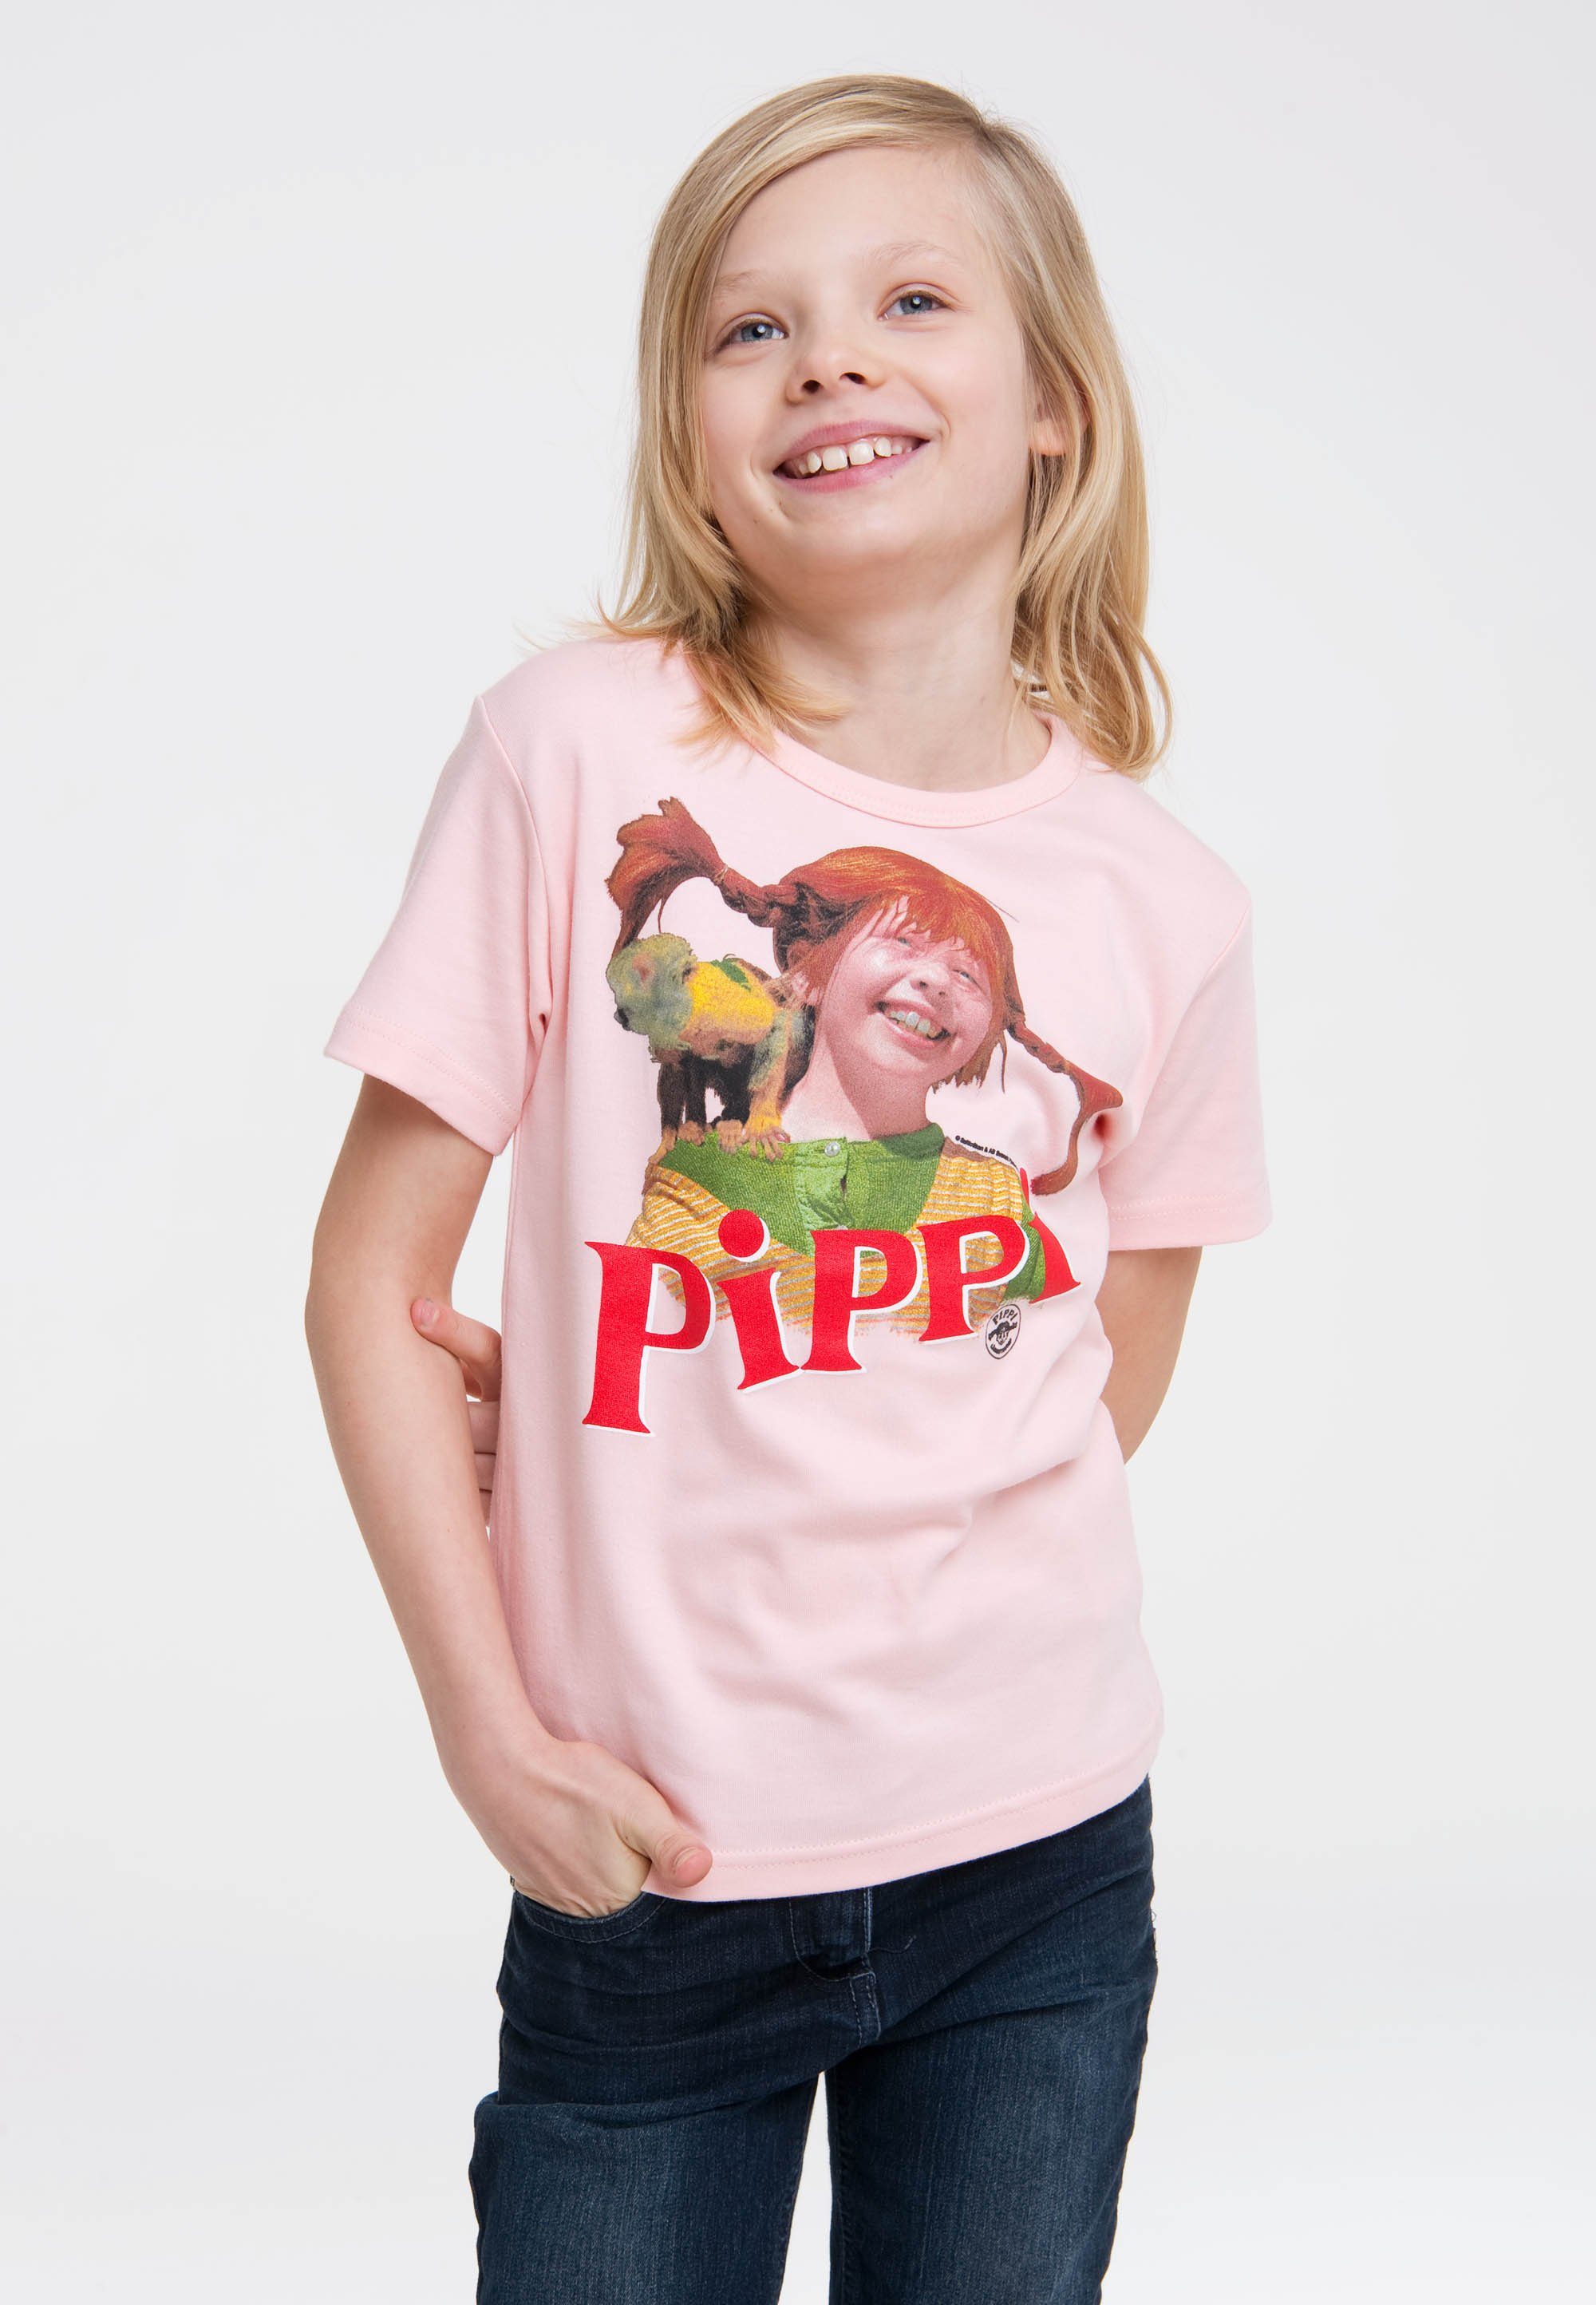 LOGOSHIRT T-Shirt Pippi Langstrumpf & Herr Nilsson mit Langstrumpf-Frontdruck rosa-rot | T-Shirts